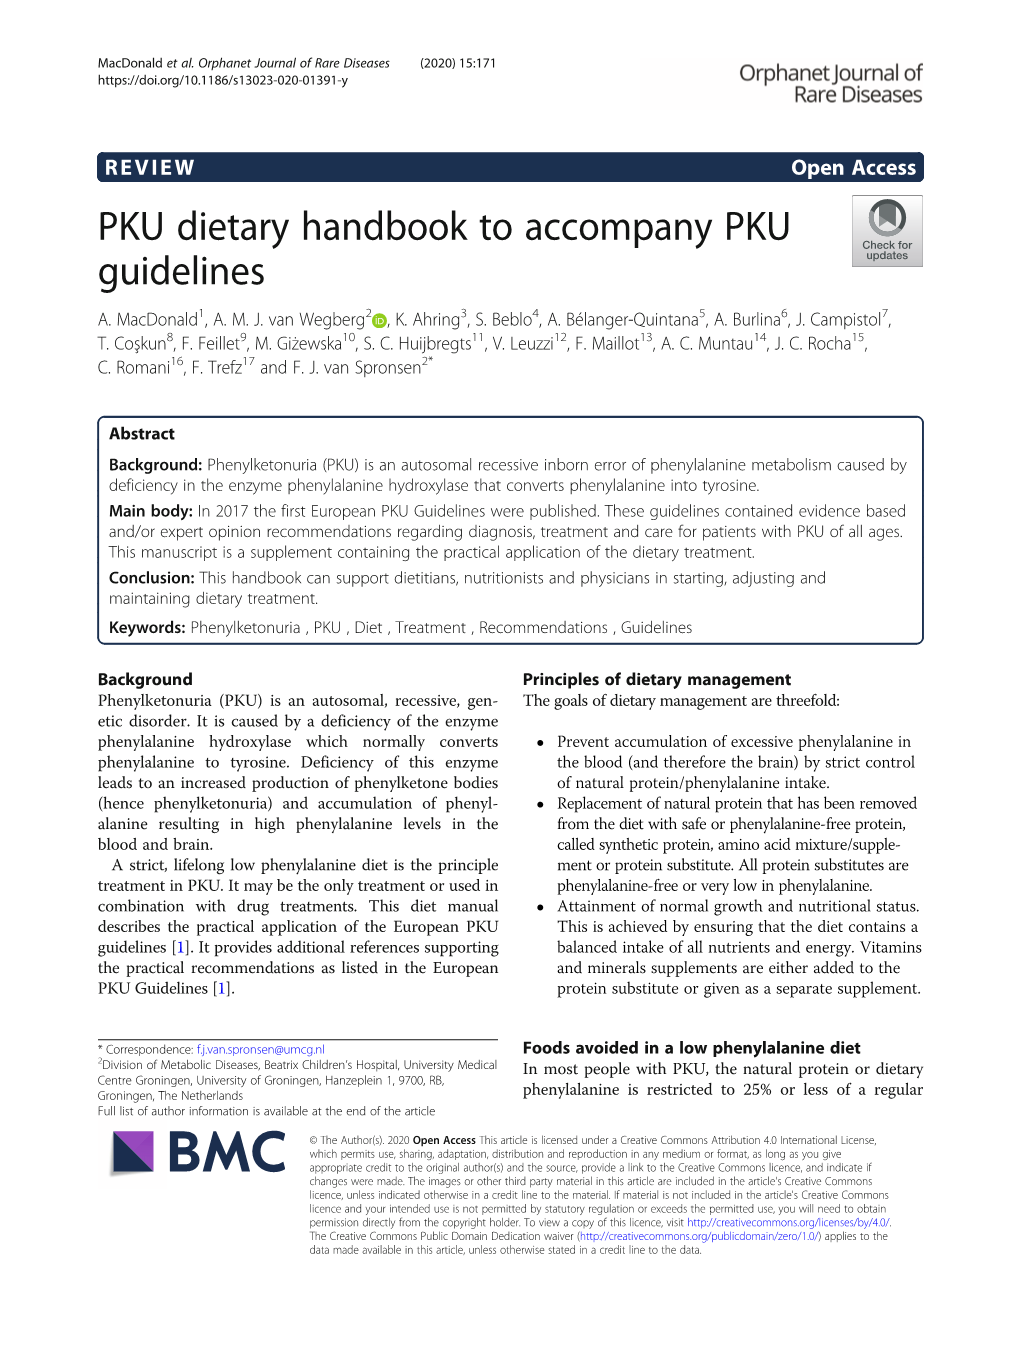 PKU Dietary Handbook to Accompany PKU Guidelines A